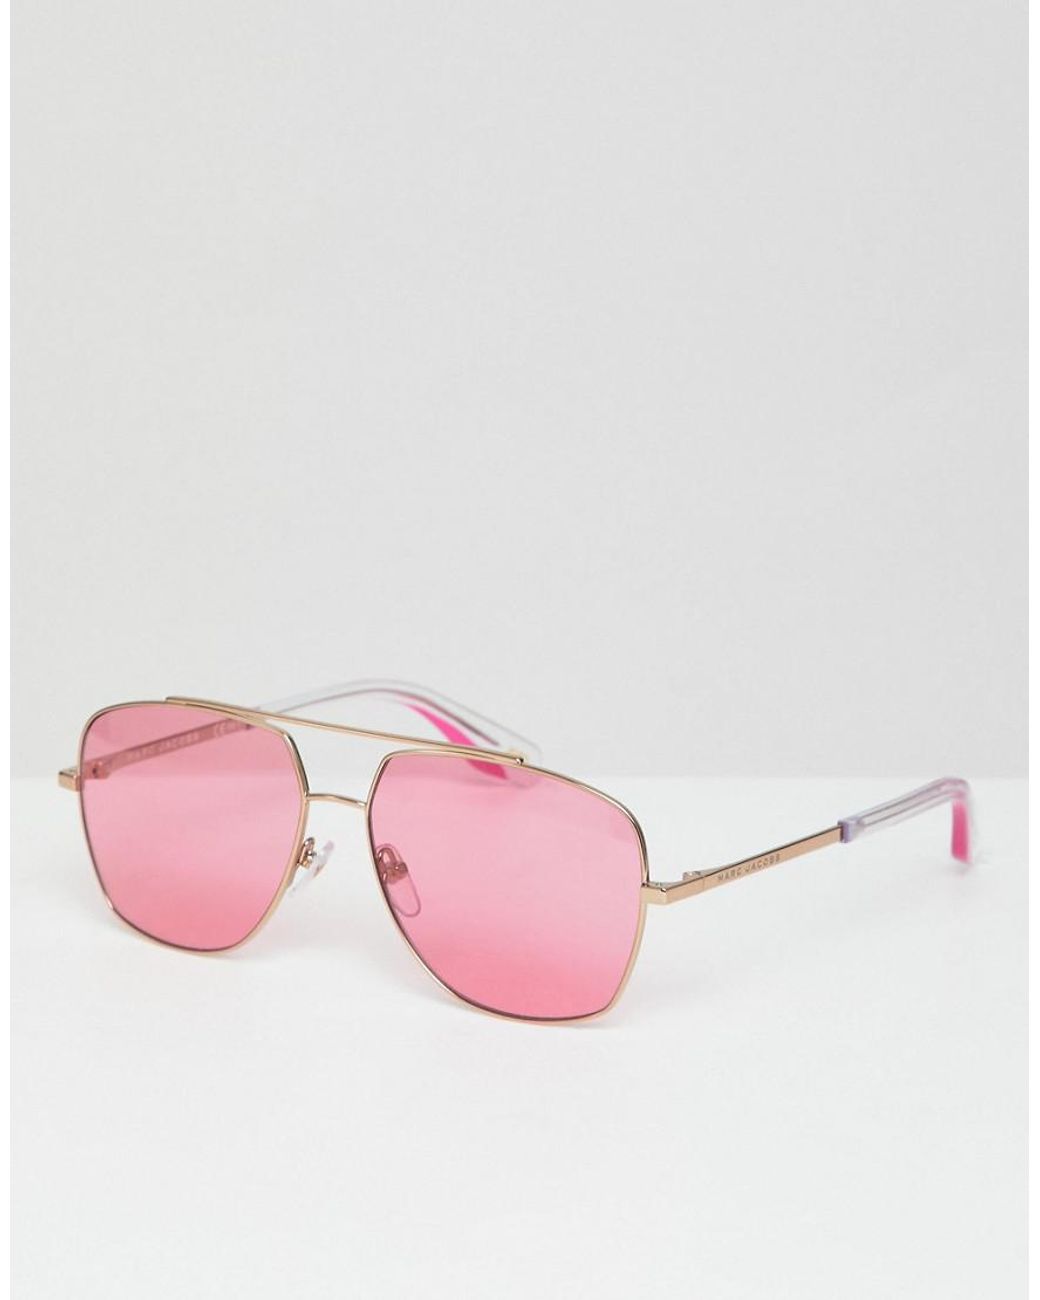 Biggest Eyewear Trend of the Year: Pink Aviator Sunglasses